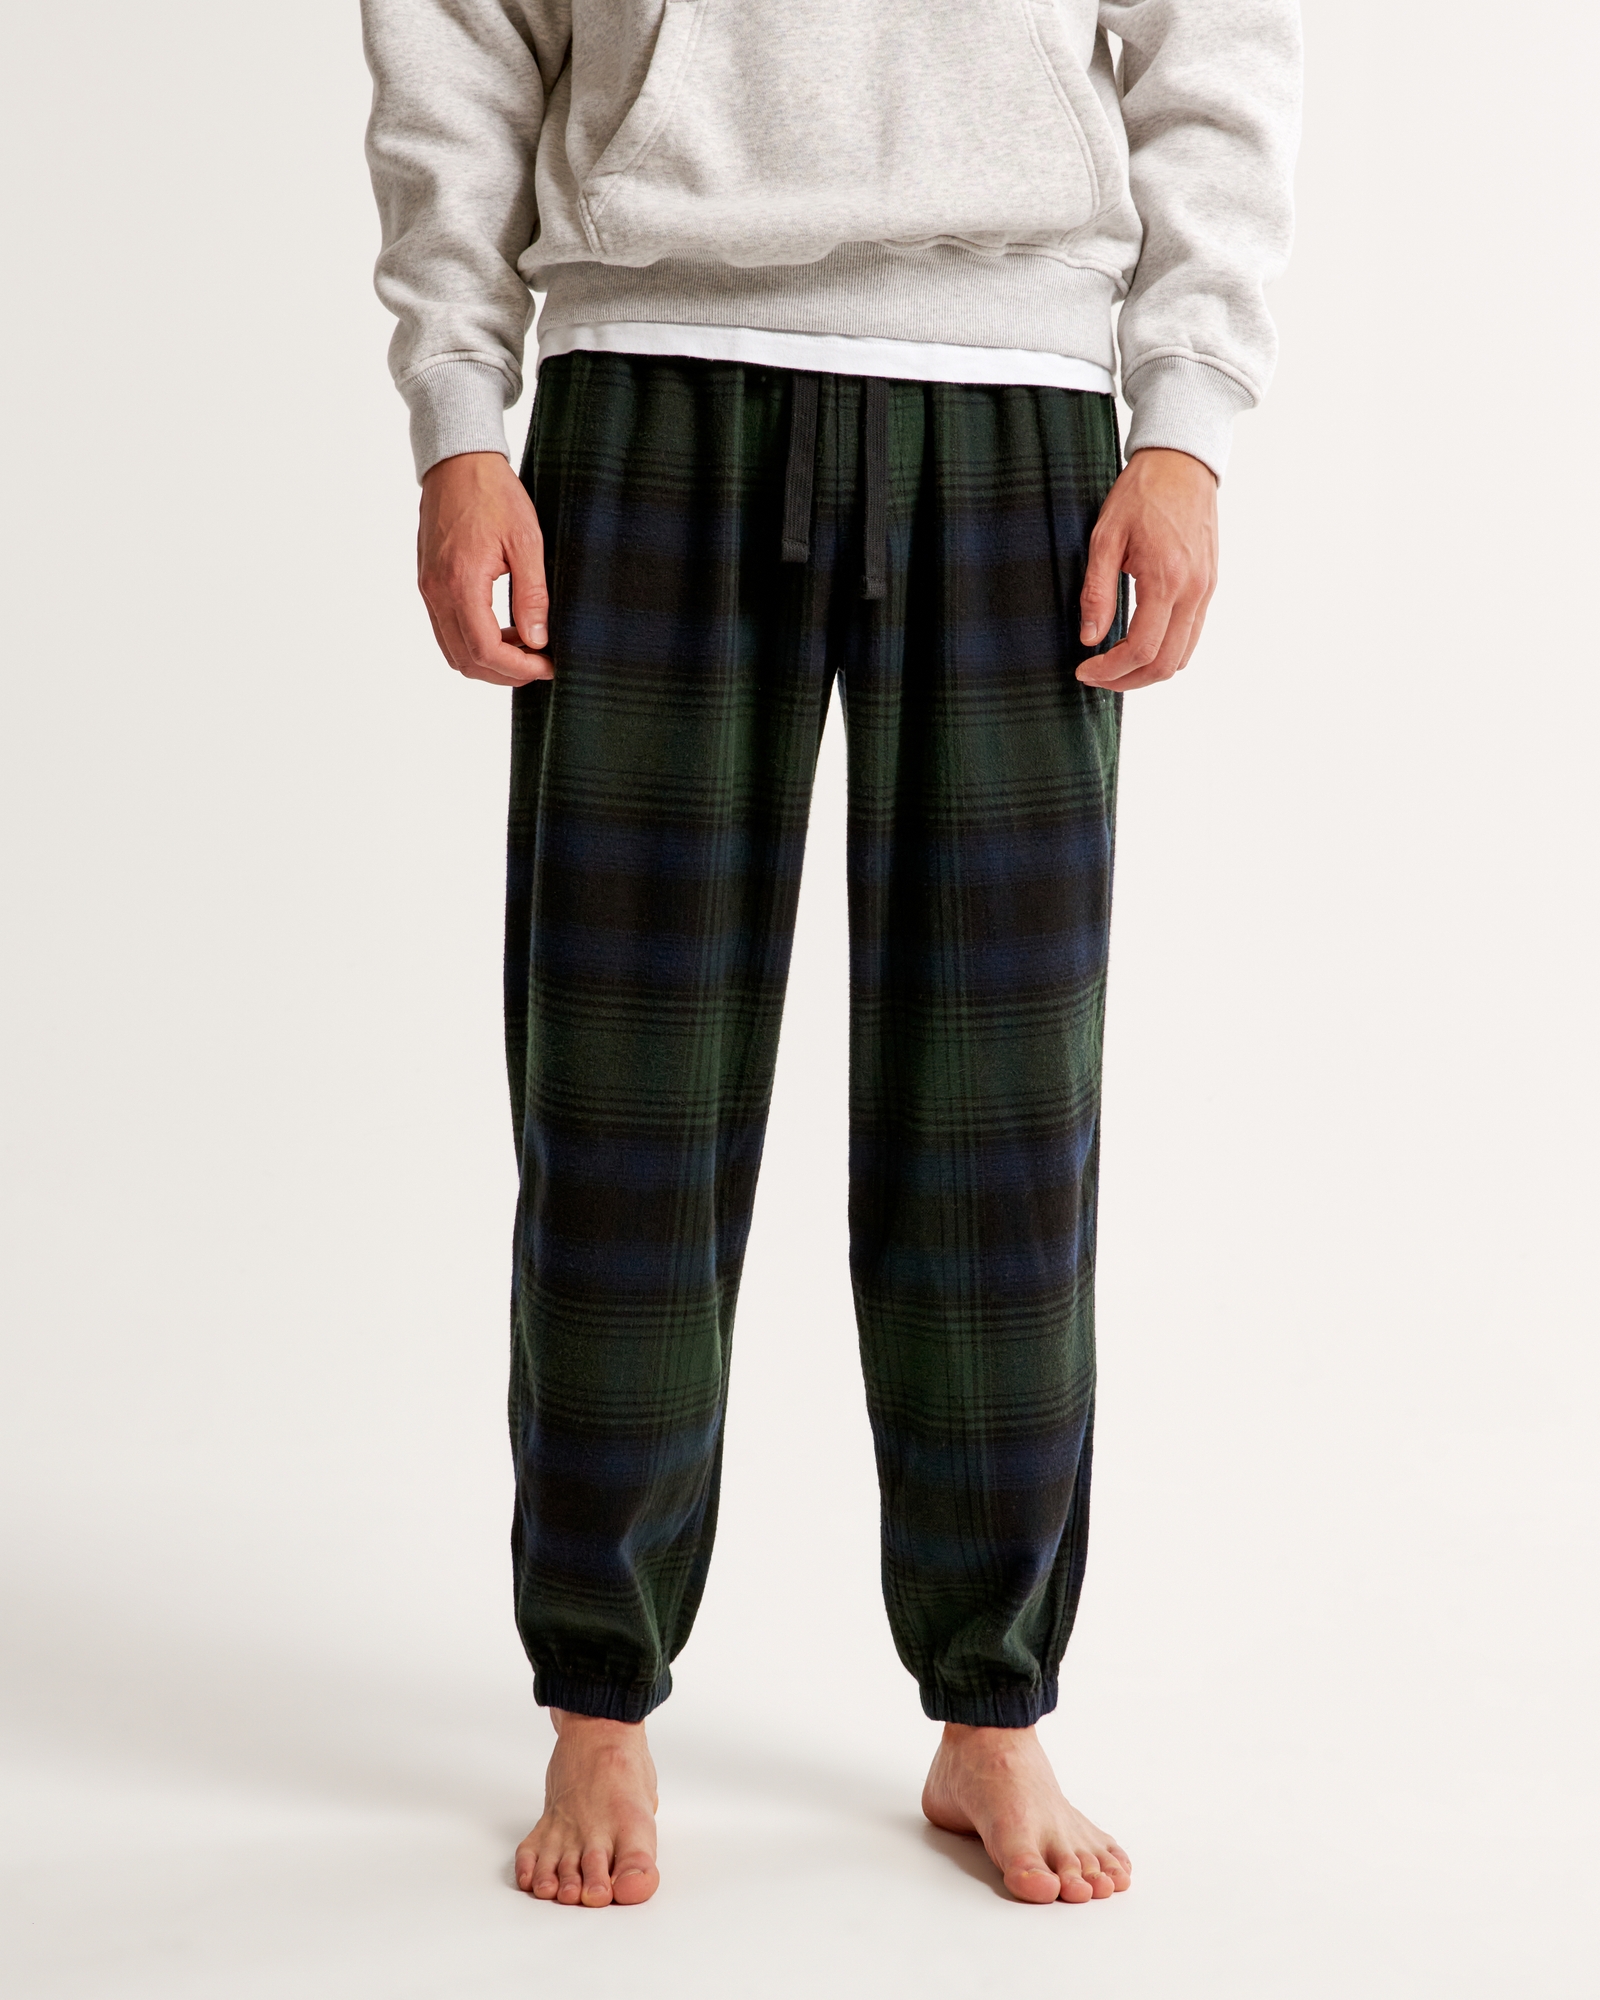 Intimo Men's Wrangler Lumberjack Plaid Cozy Plush Sleep Pants